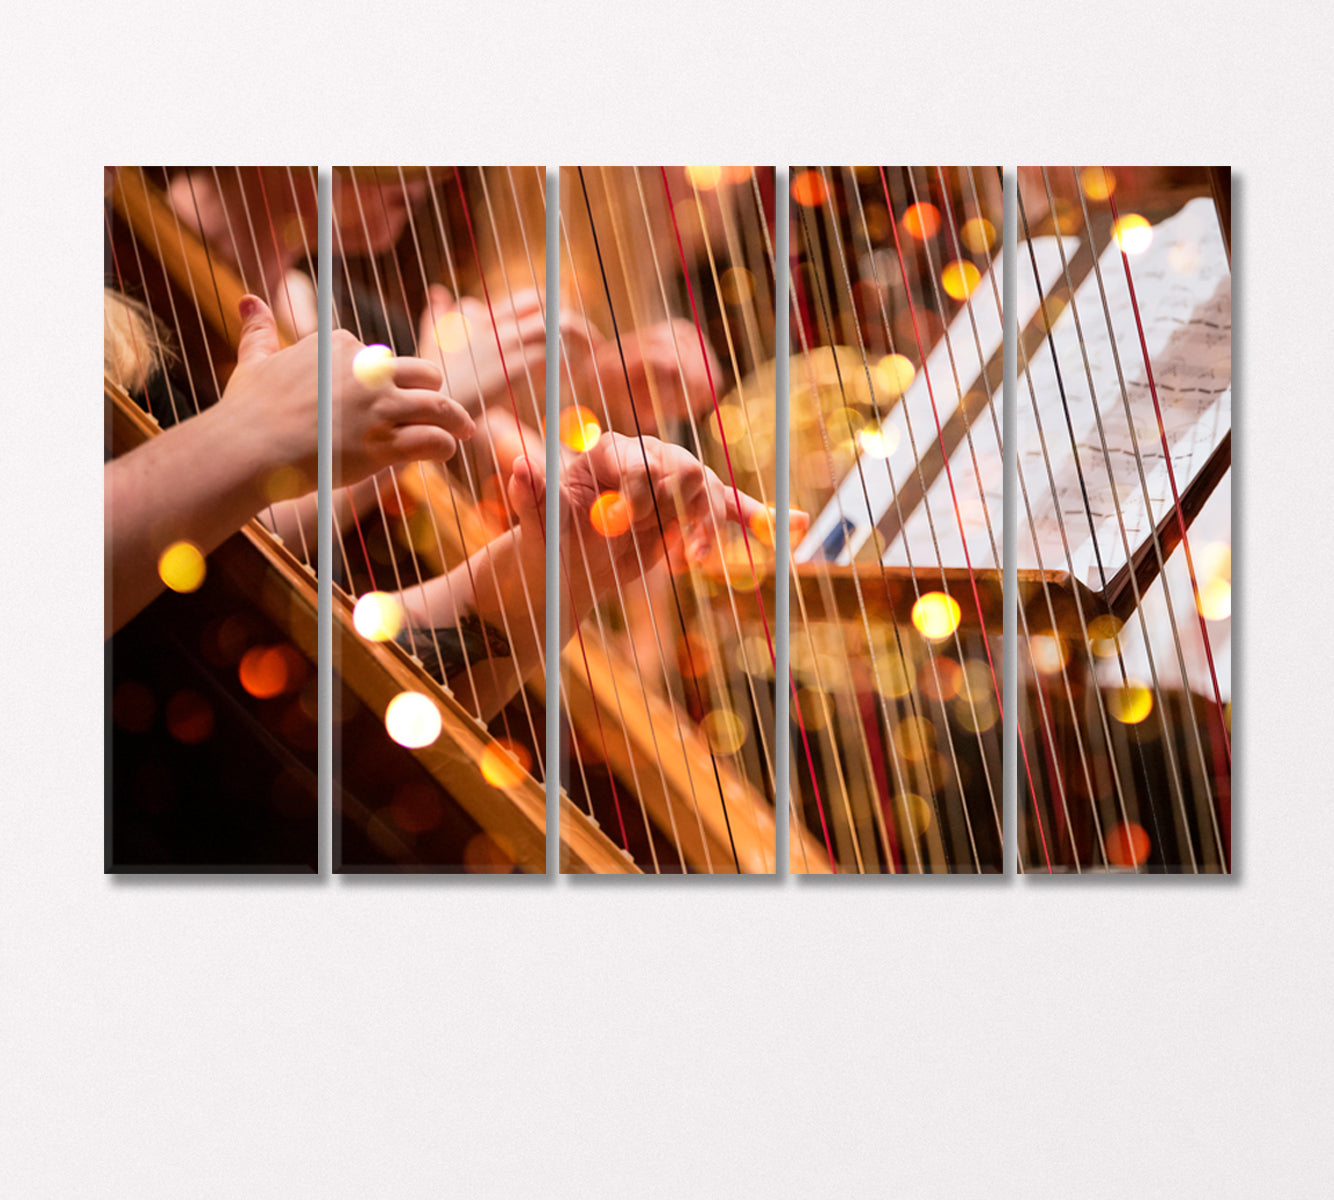 Playing the Harp Close Up Canvas Print-Canvas Print-CetArt-5 Panels-36x24 inches-CetArt